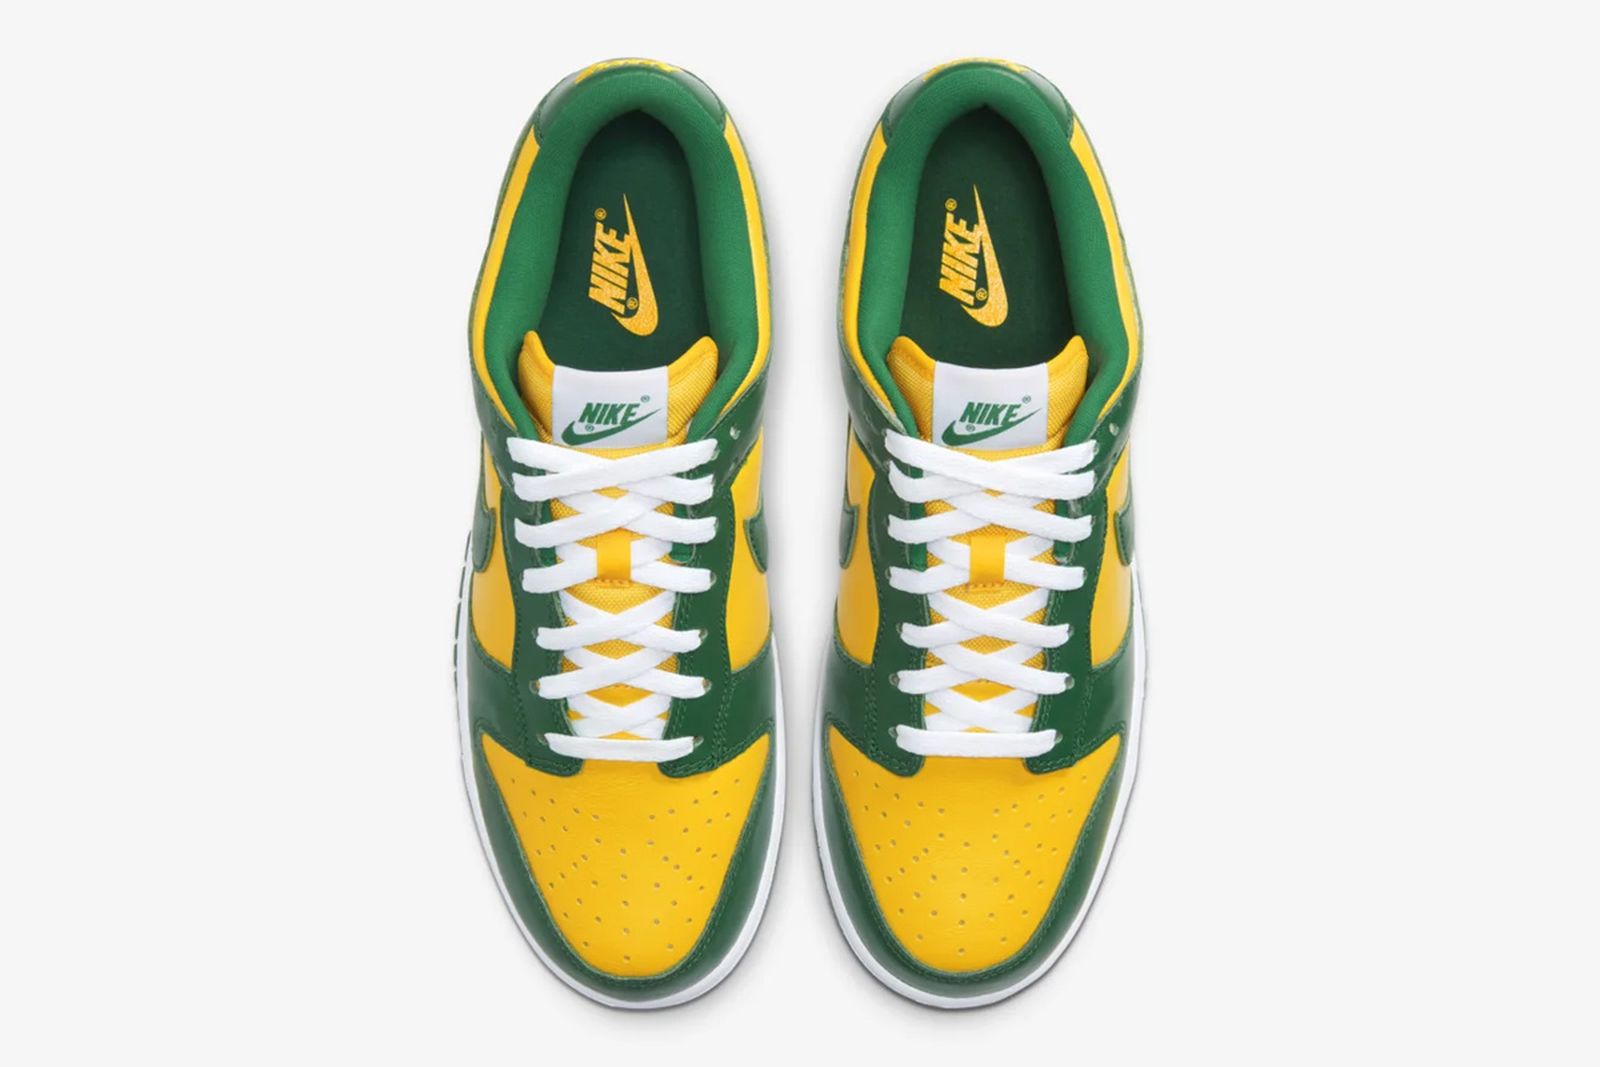 Nike SB Dunk Low Brazil yellow green and white product shot